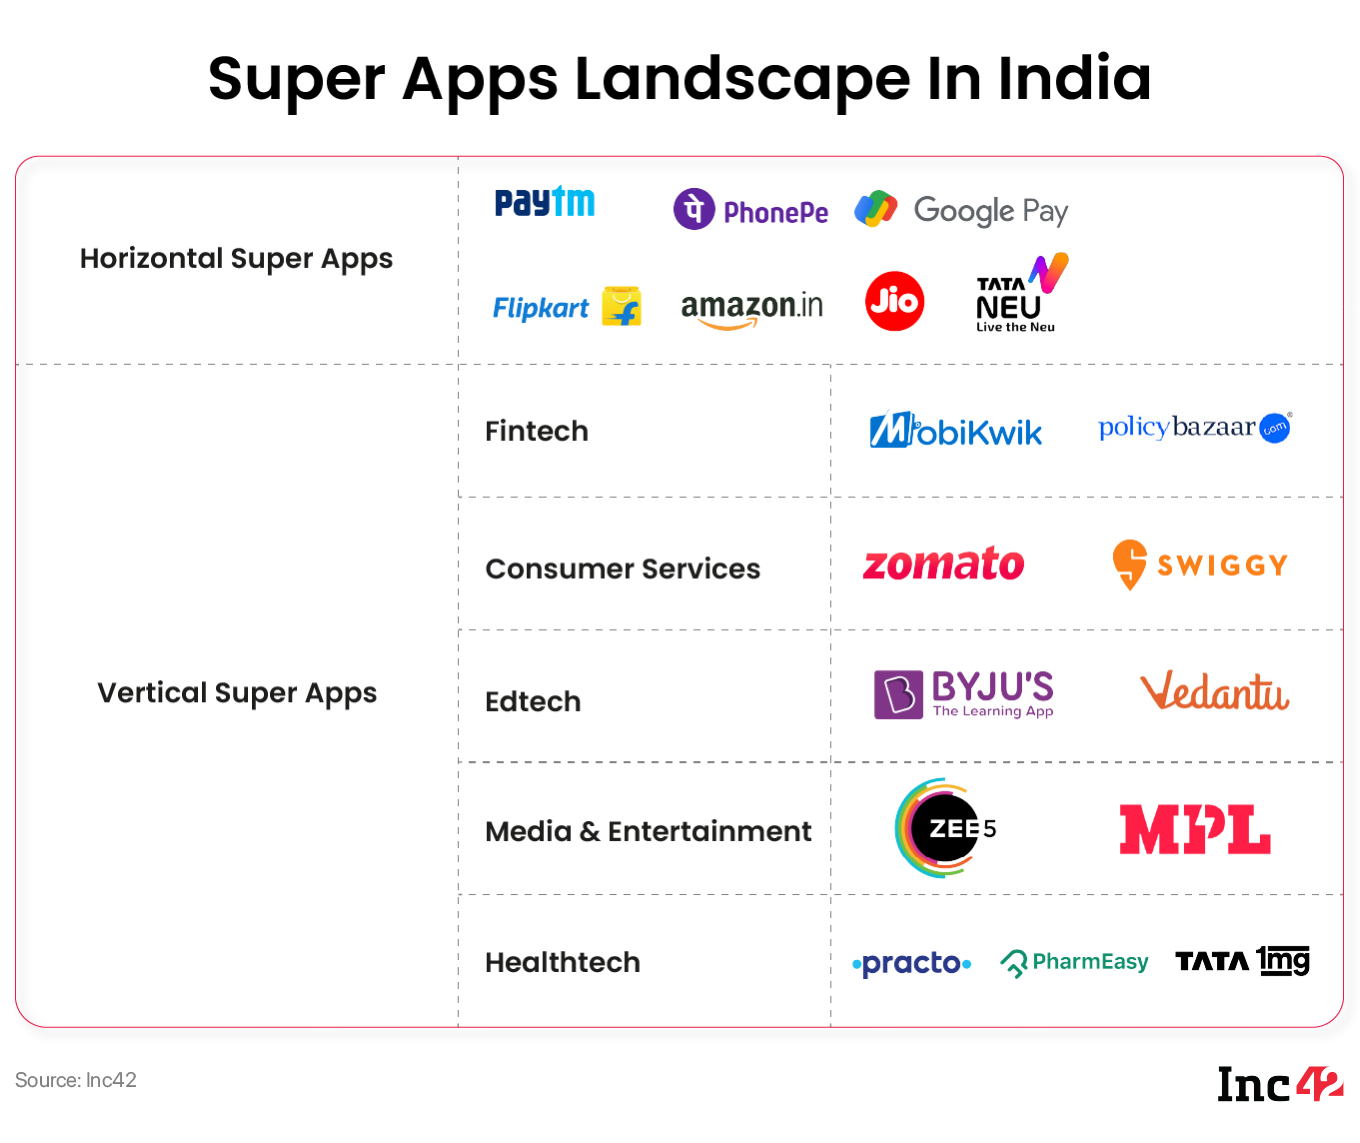 Super Apps Landscape In India